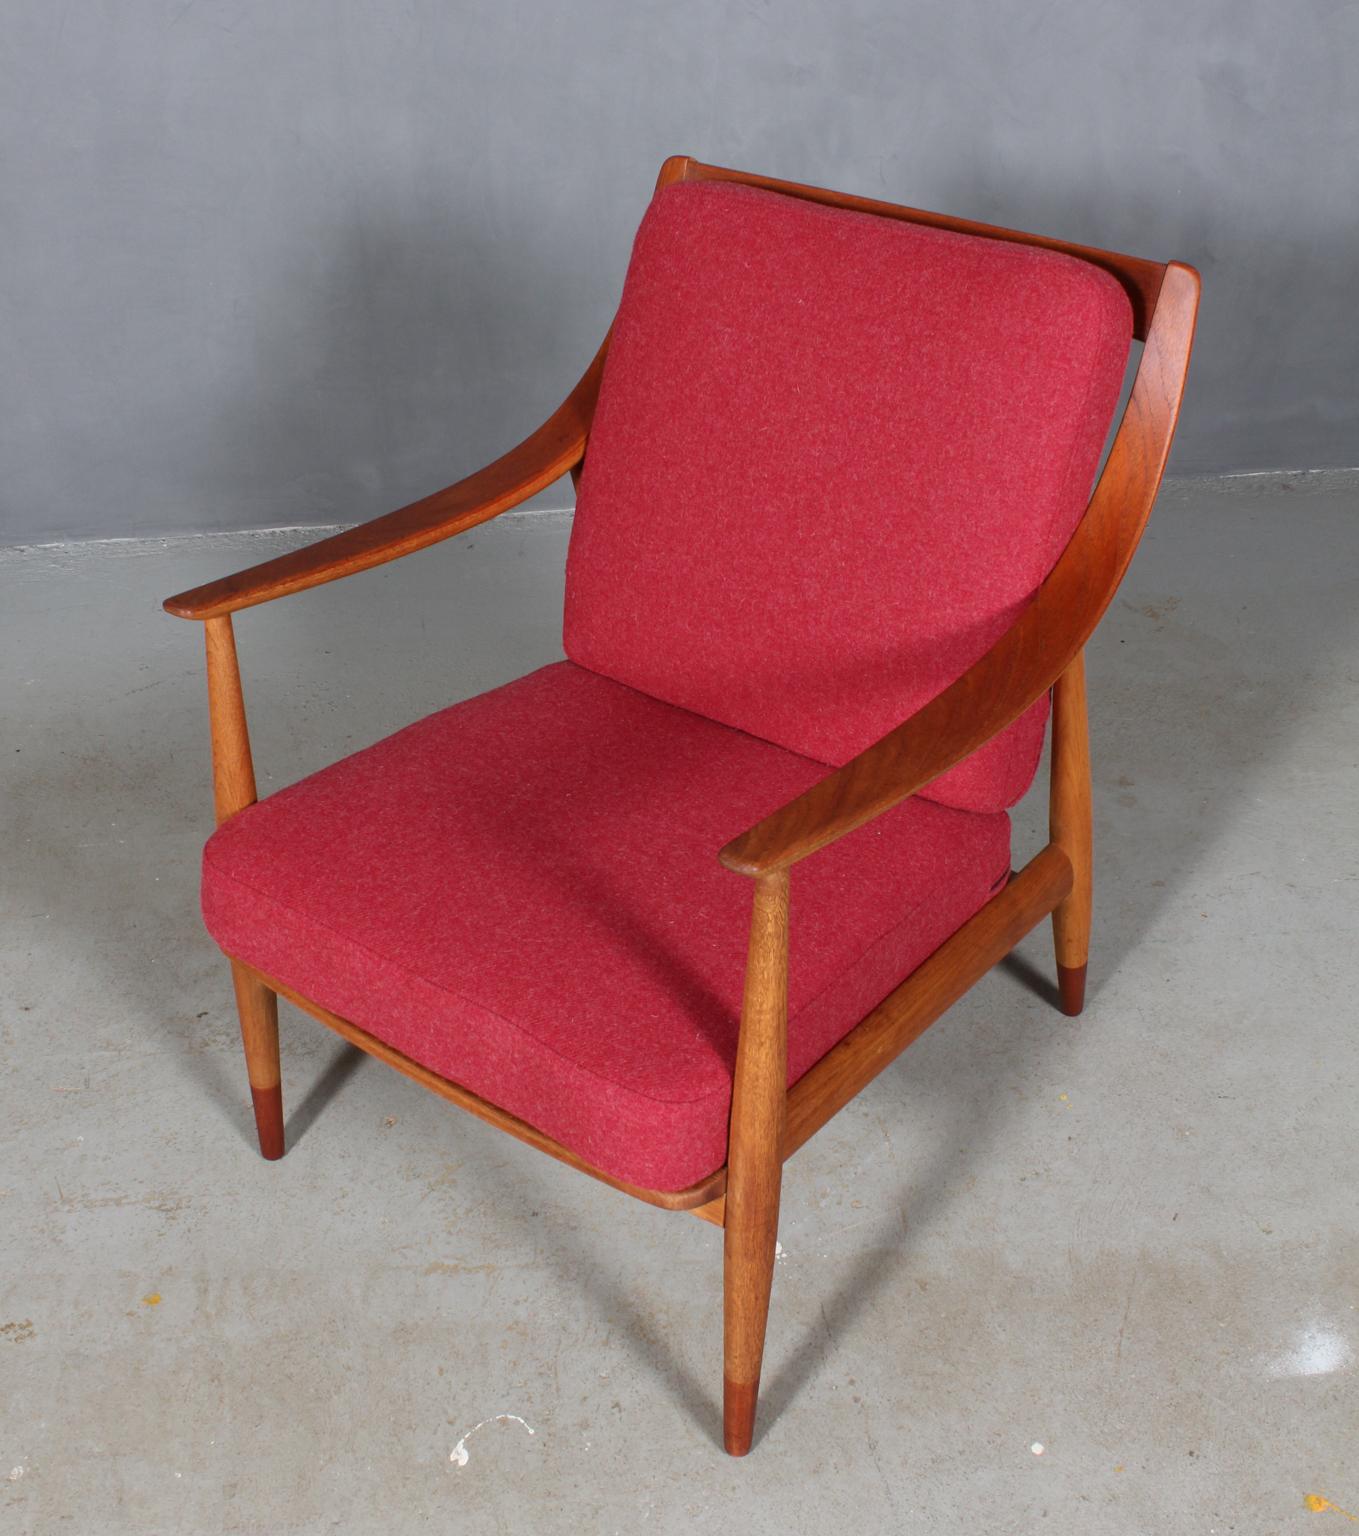 Peter Hvidt & Orla Mølgaard Nielsen lounge chair new upholstered with red Divinia Melange 100 % New Zealand wool.

Frame in teak and oak.

Made by France & Daverkosen.